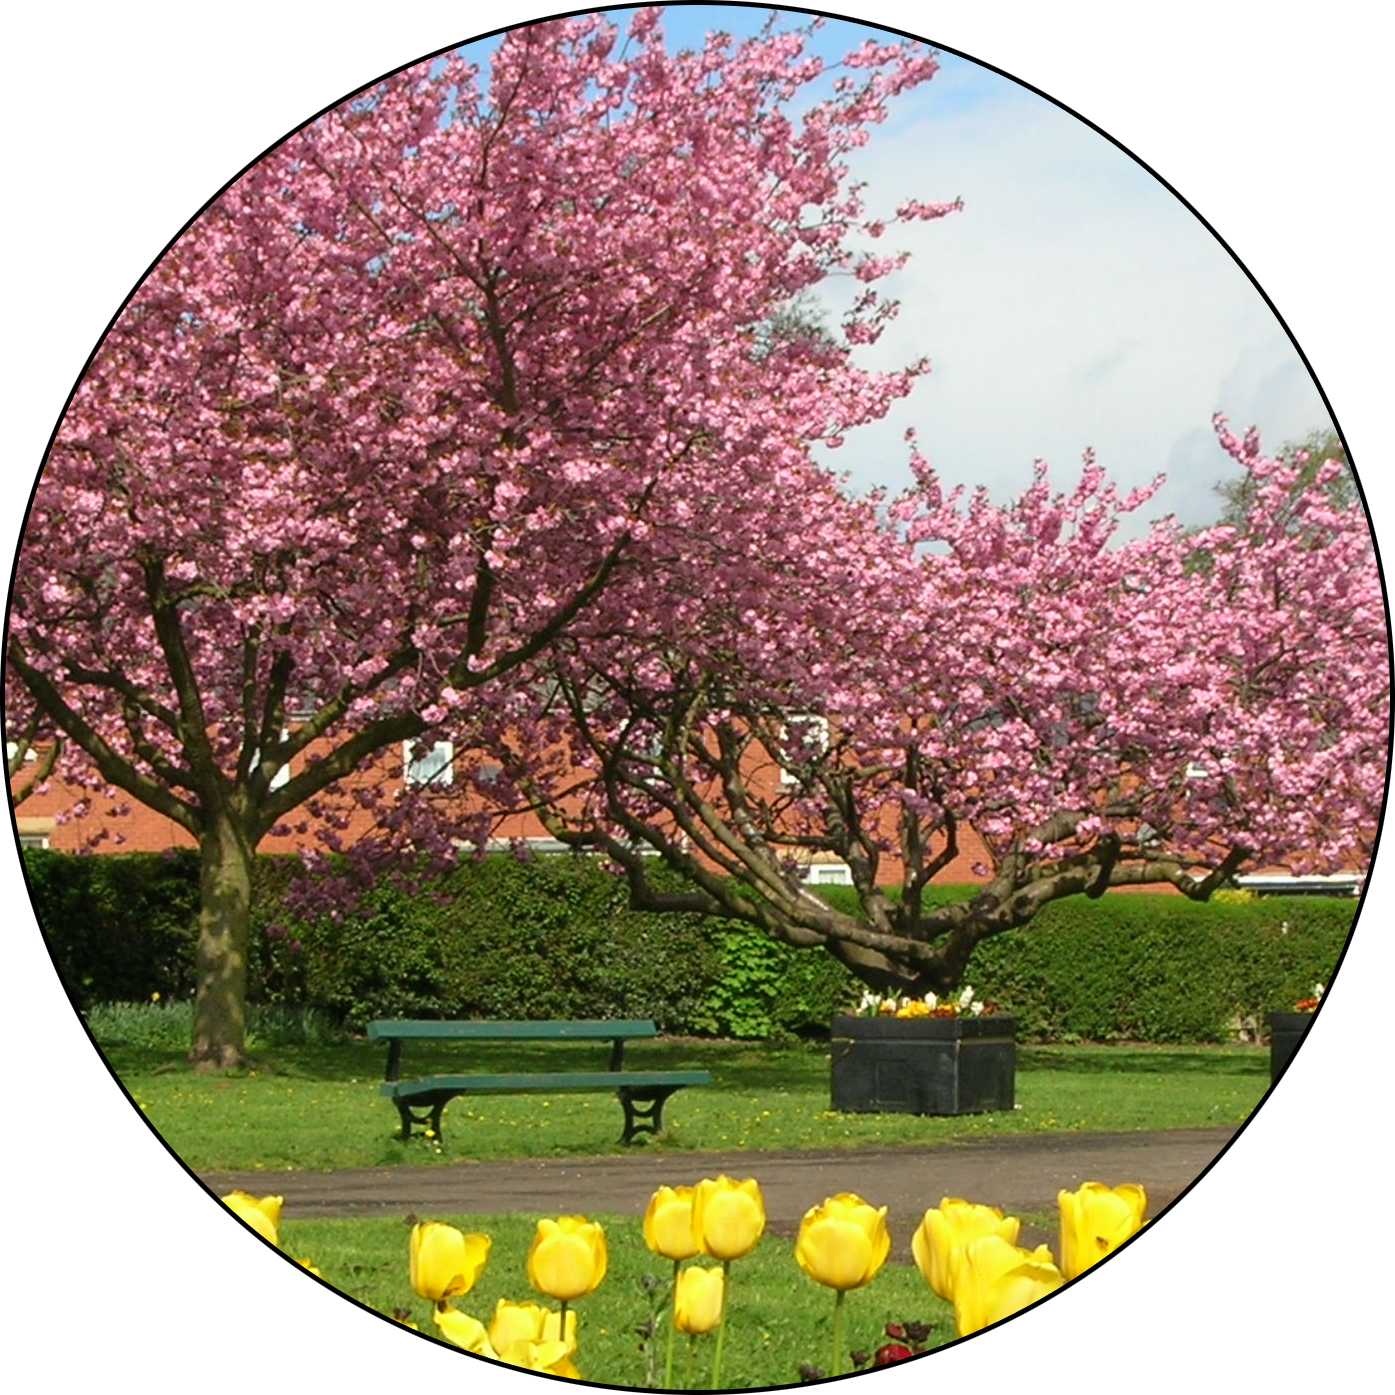 Tree in bloom in Ecclesfield Park